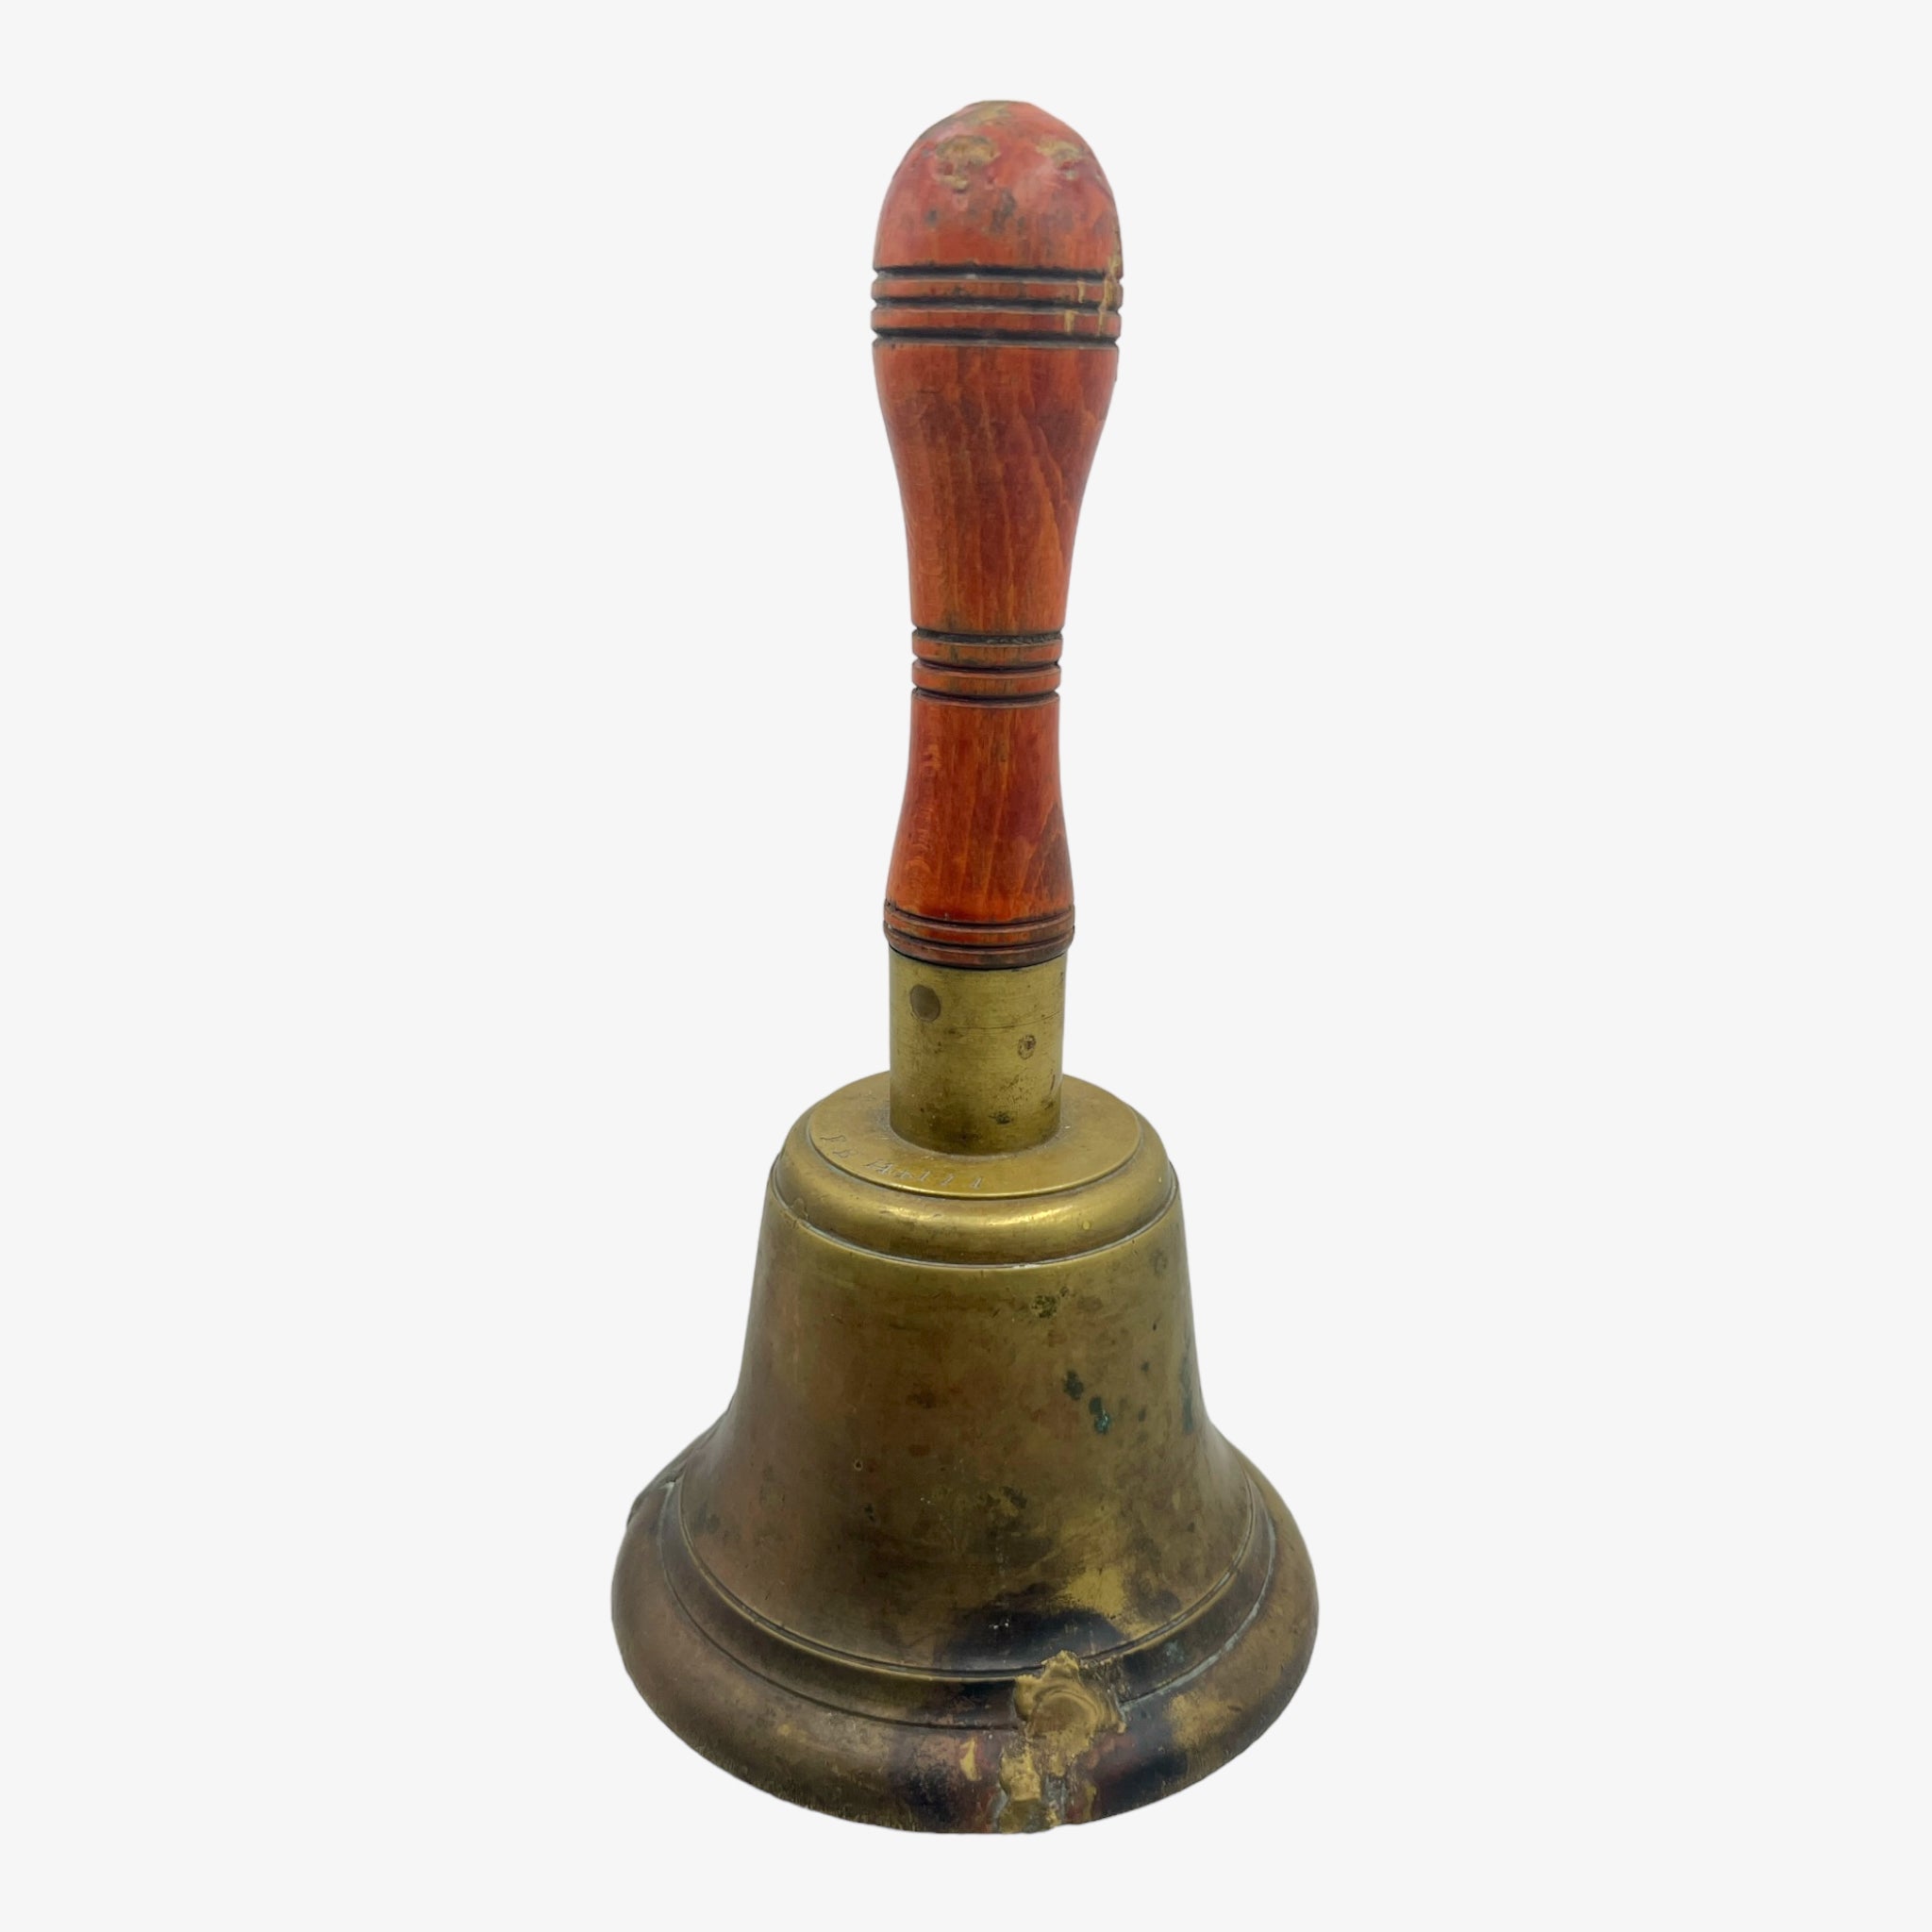 Antique Brass Nautical/Schoolhouse Hand Bell